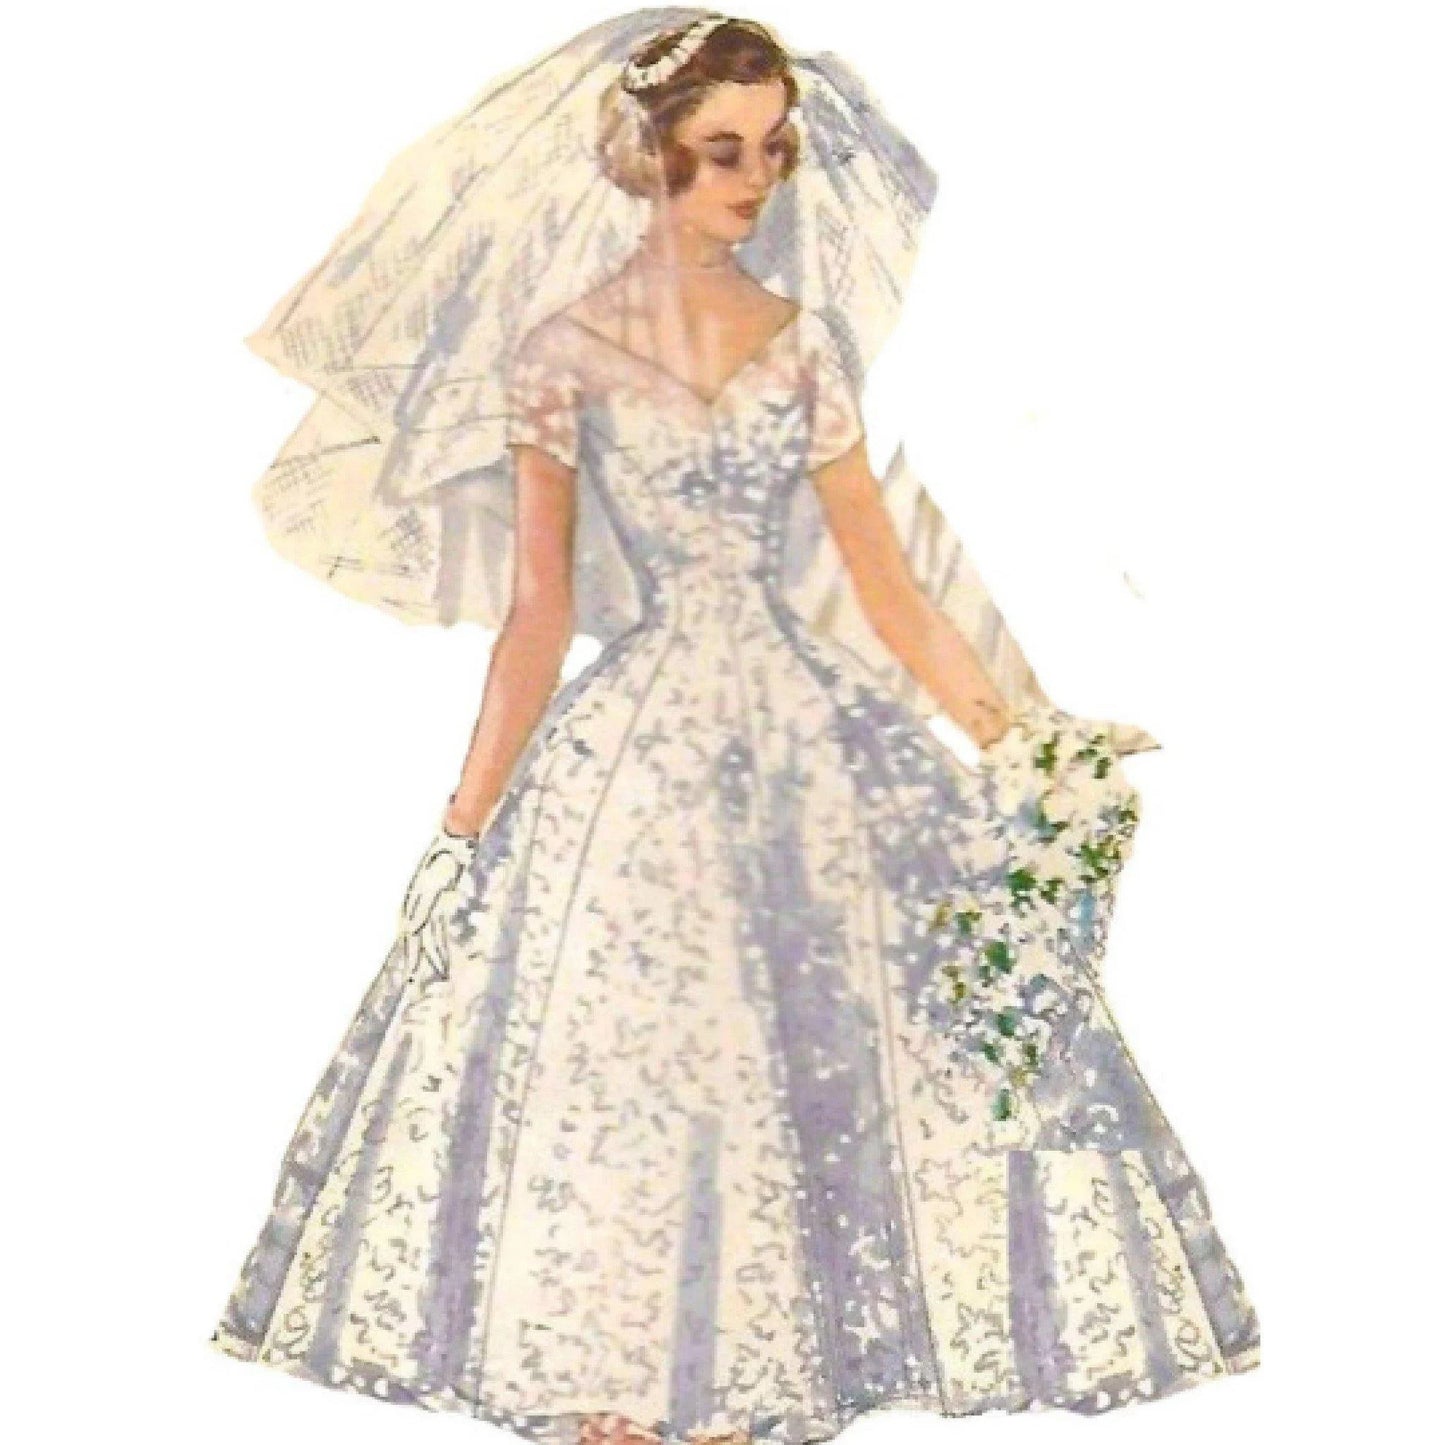 woman wearing wedding dress